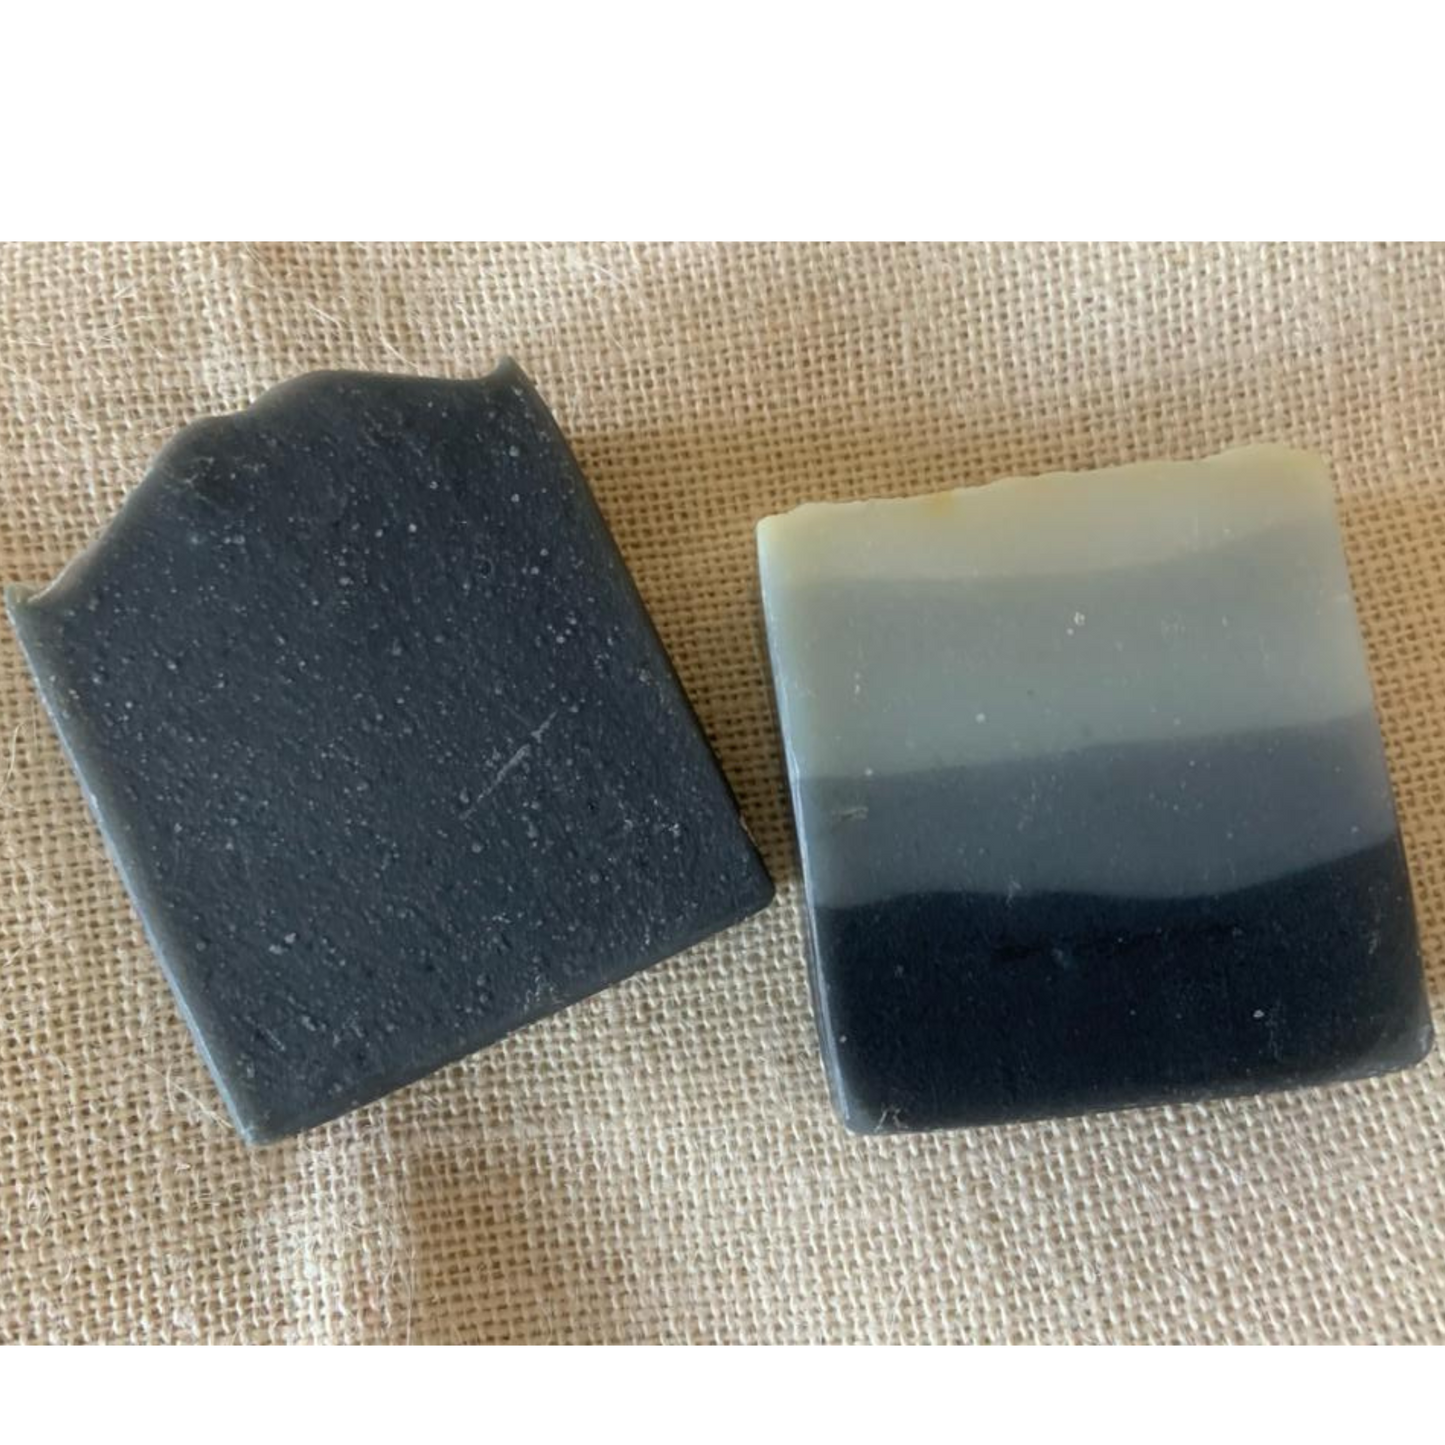 Charcoal Cold Processed Handmade Natural Organic Premium Soap